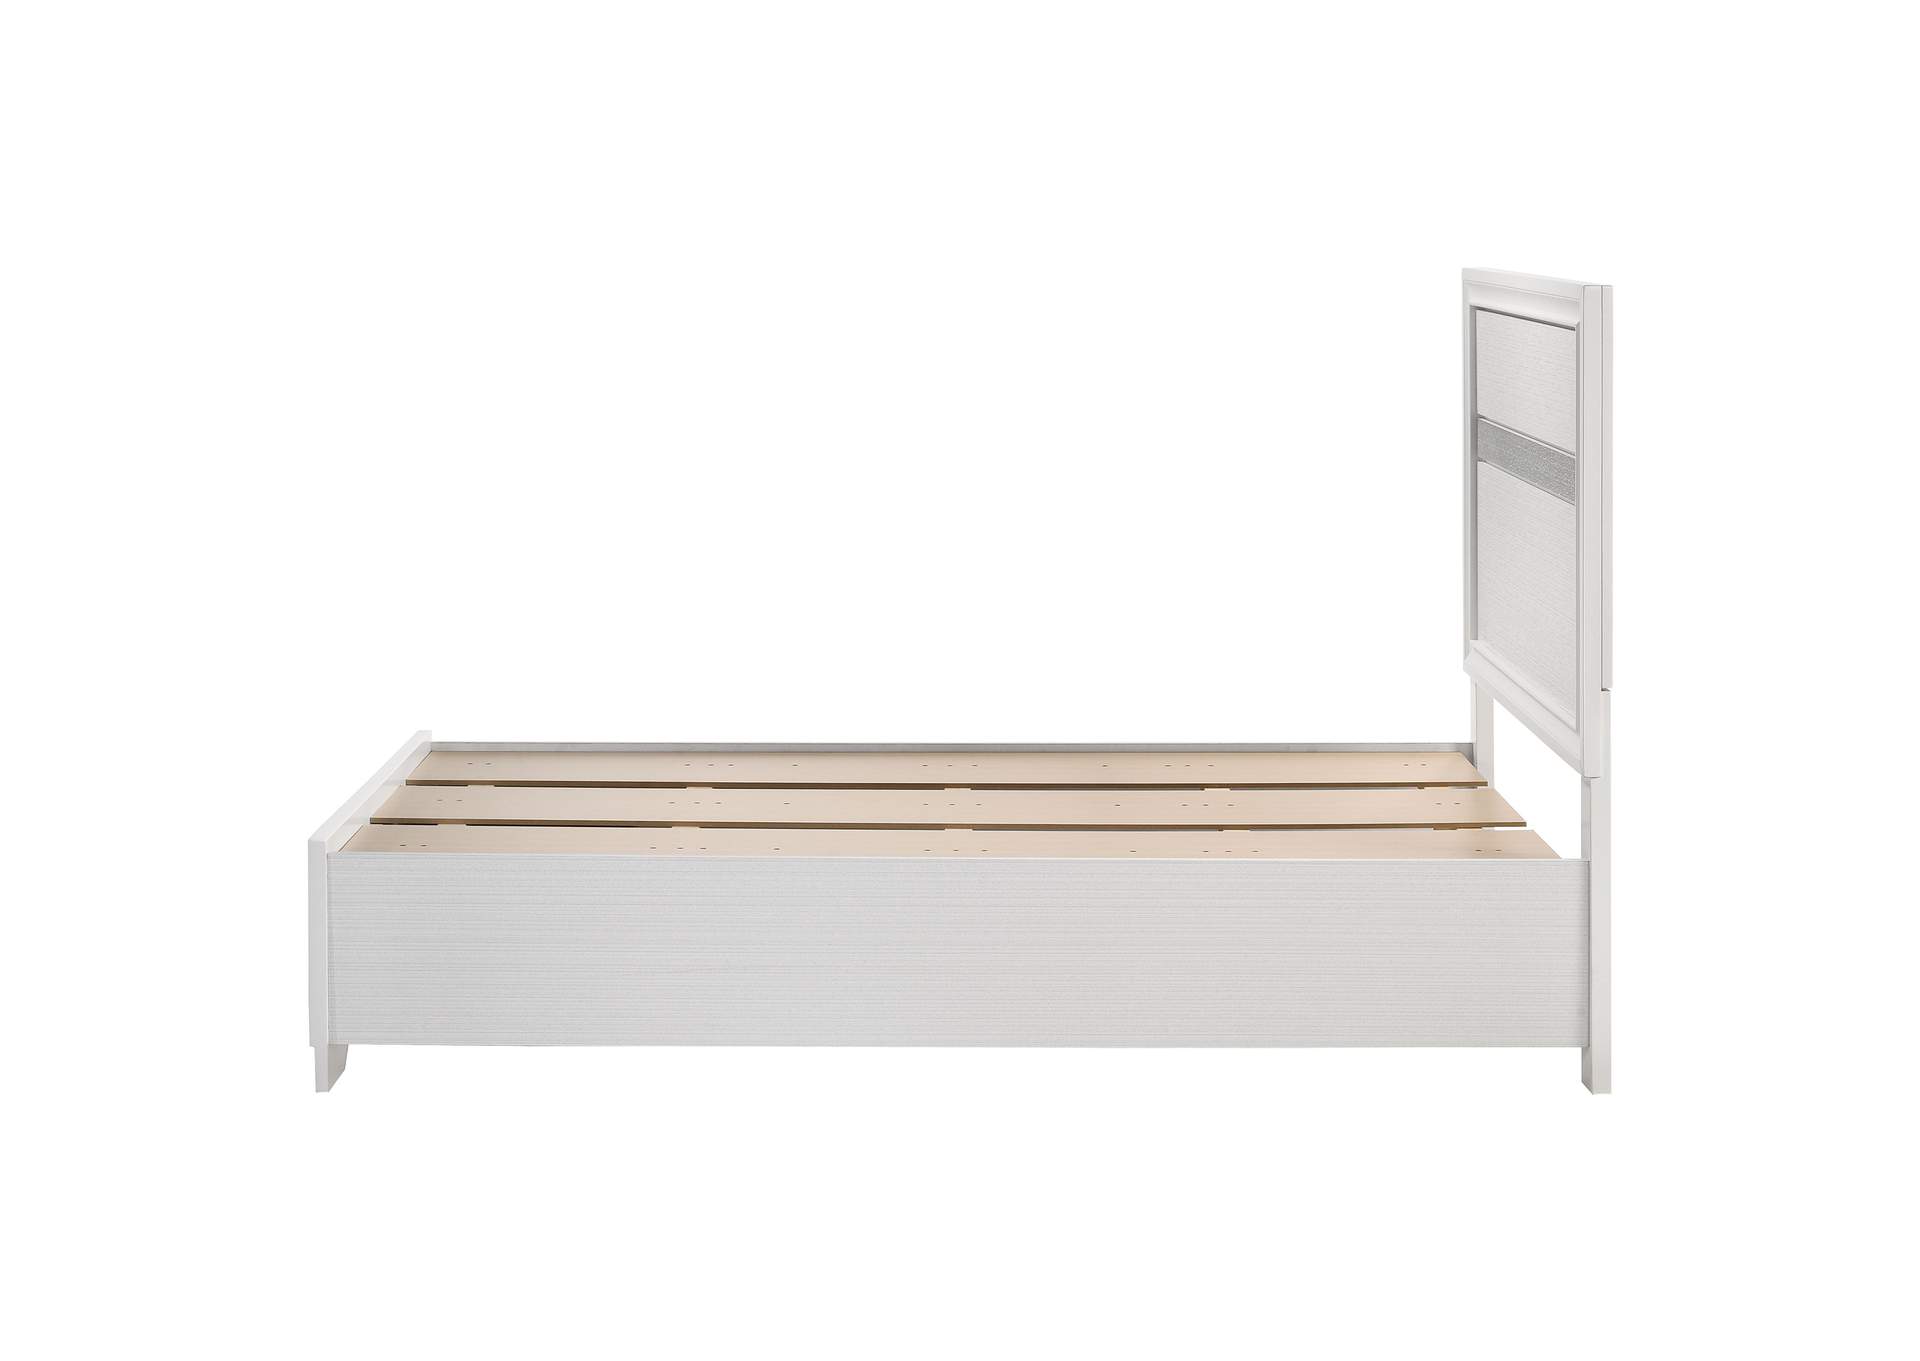 Miranda Twin Storage Bed White,Coaster Furniture